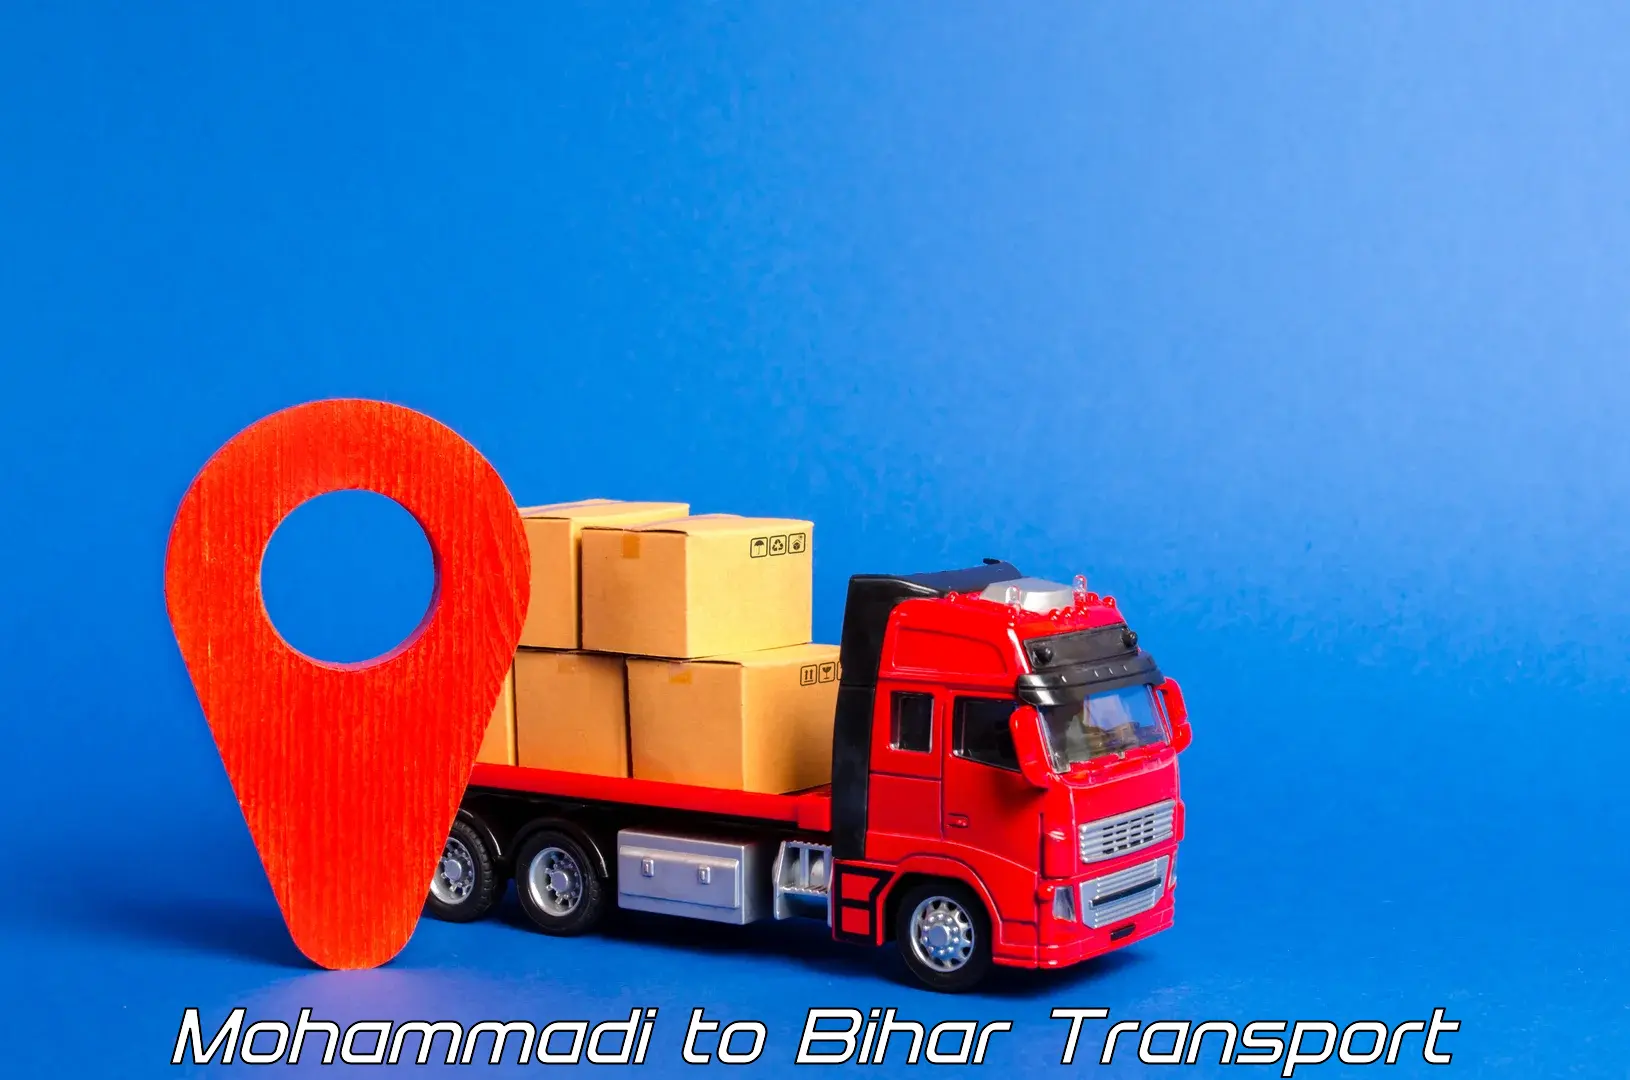 Transport in sharing in Mohammadi to Biraul